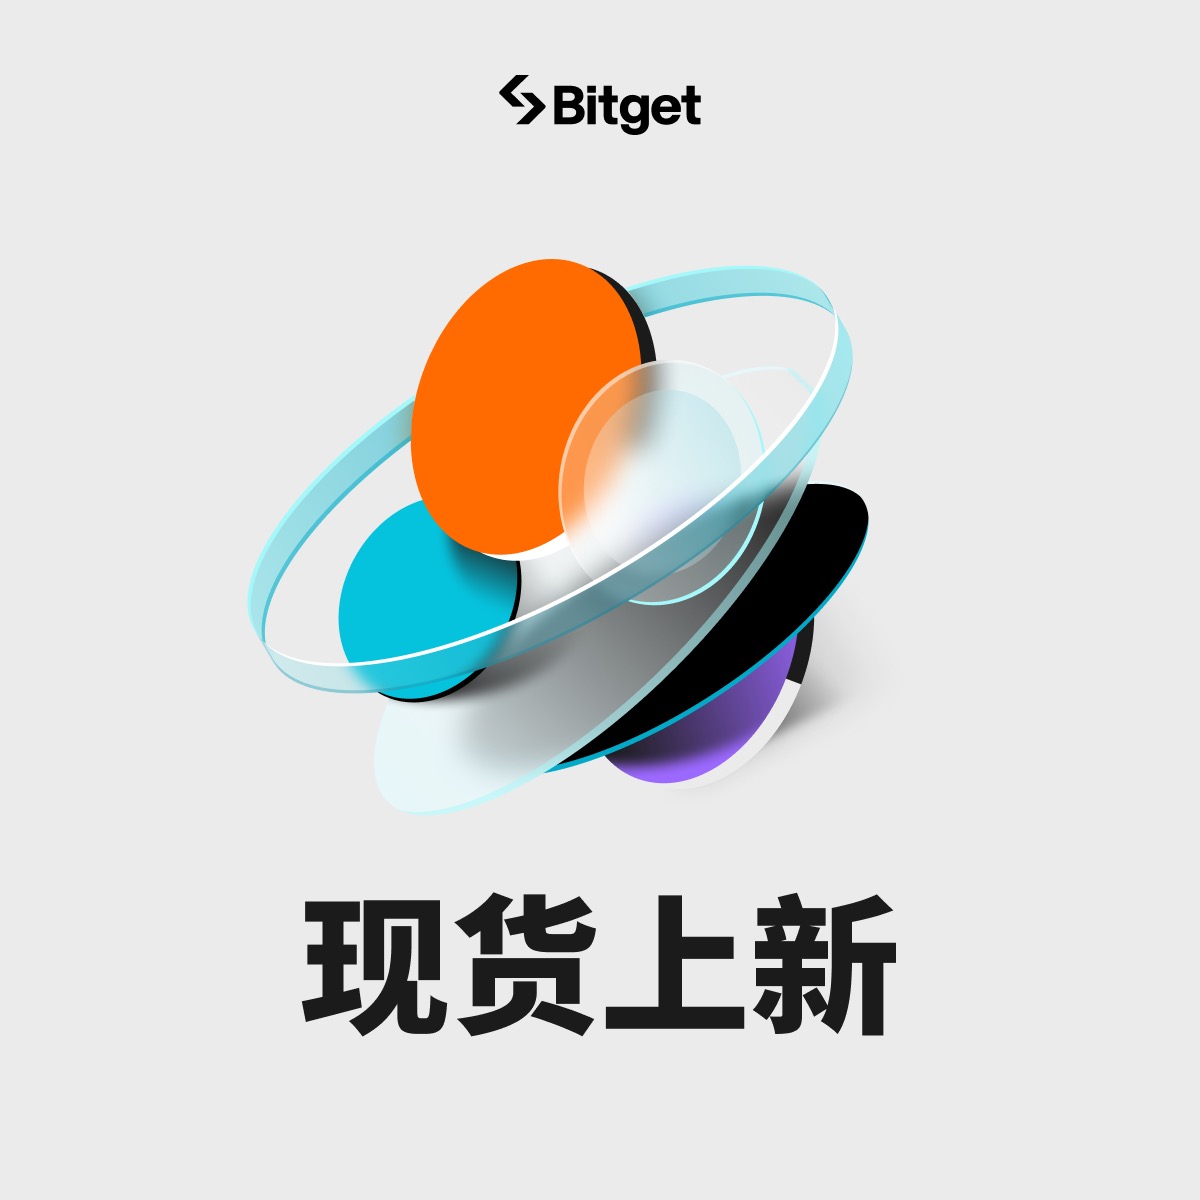 ✨#Bitget 现货上新【 充值均已开放 】✨ ✅ $APRS 交易时间：5.9 15:00（UTC+8） ✅ $ROSX 交易时间：5.9 18:00（UTC+8） 提现等详情，请见公告中心👇 bitget.fit/zh-CN/support/…